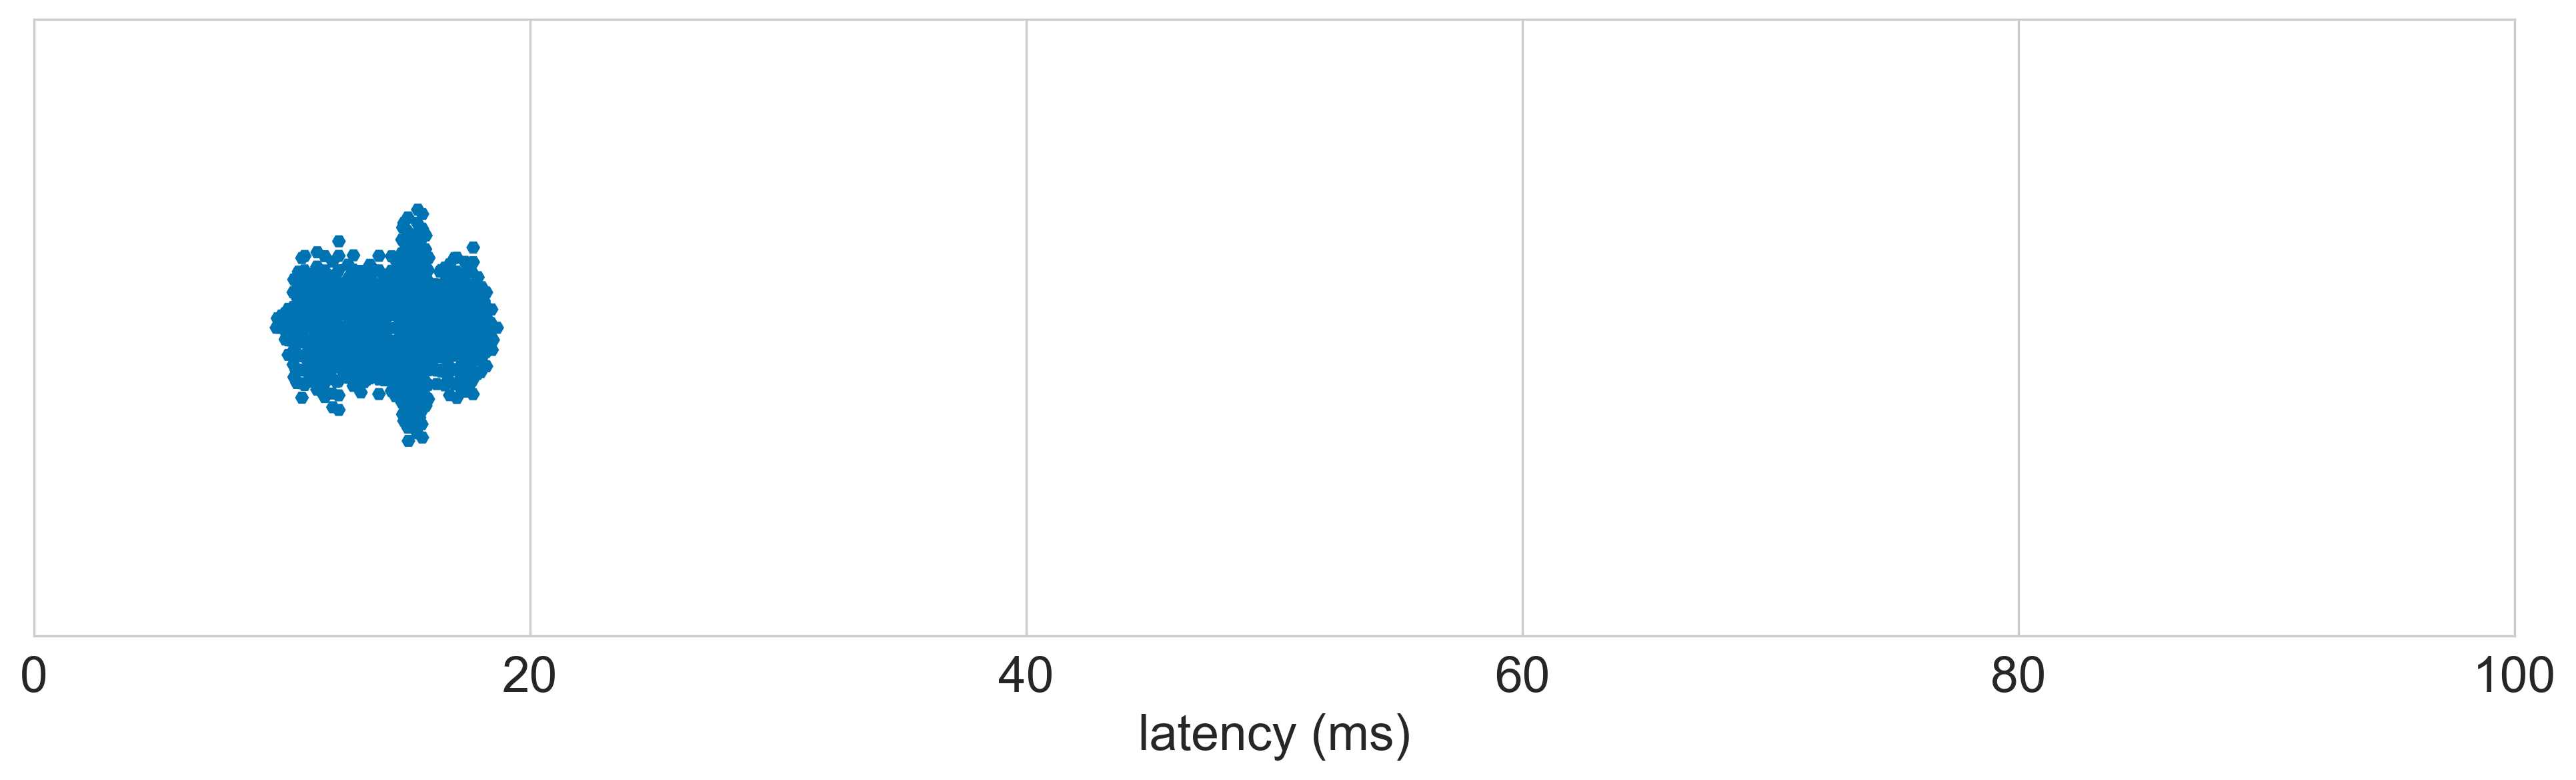 PixArt_HP_USB_Optical_Mouse latency distribution 